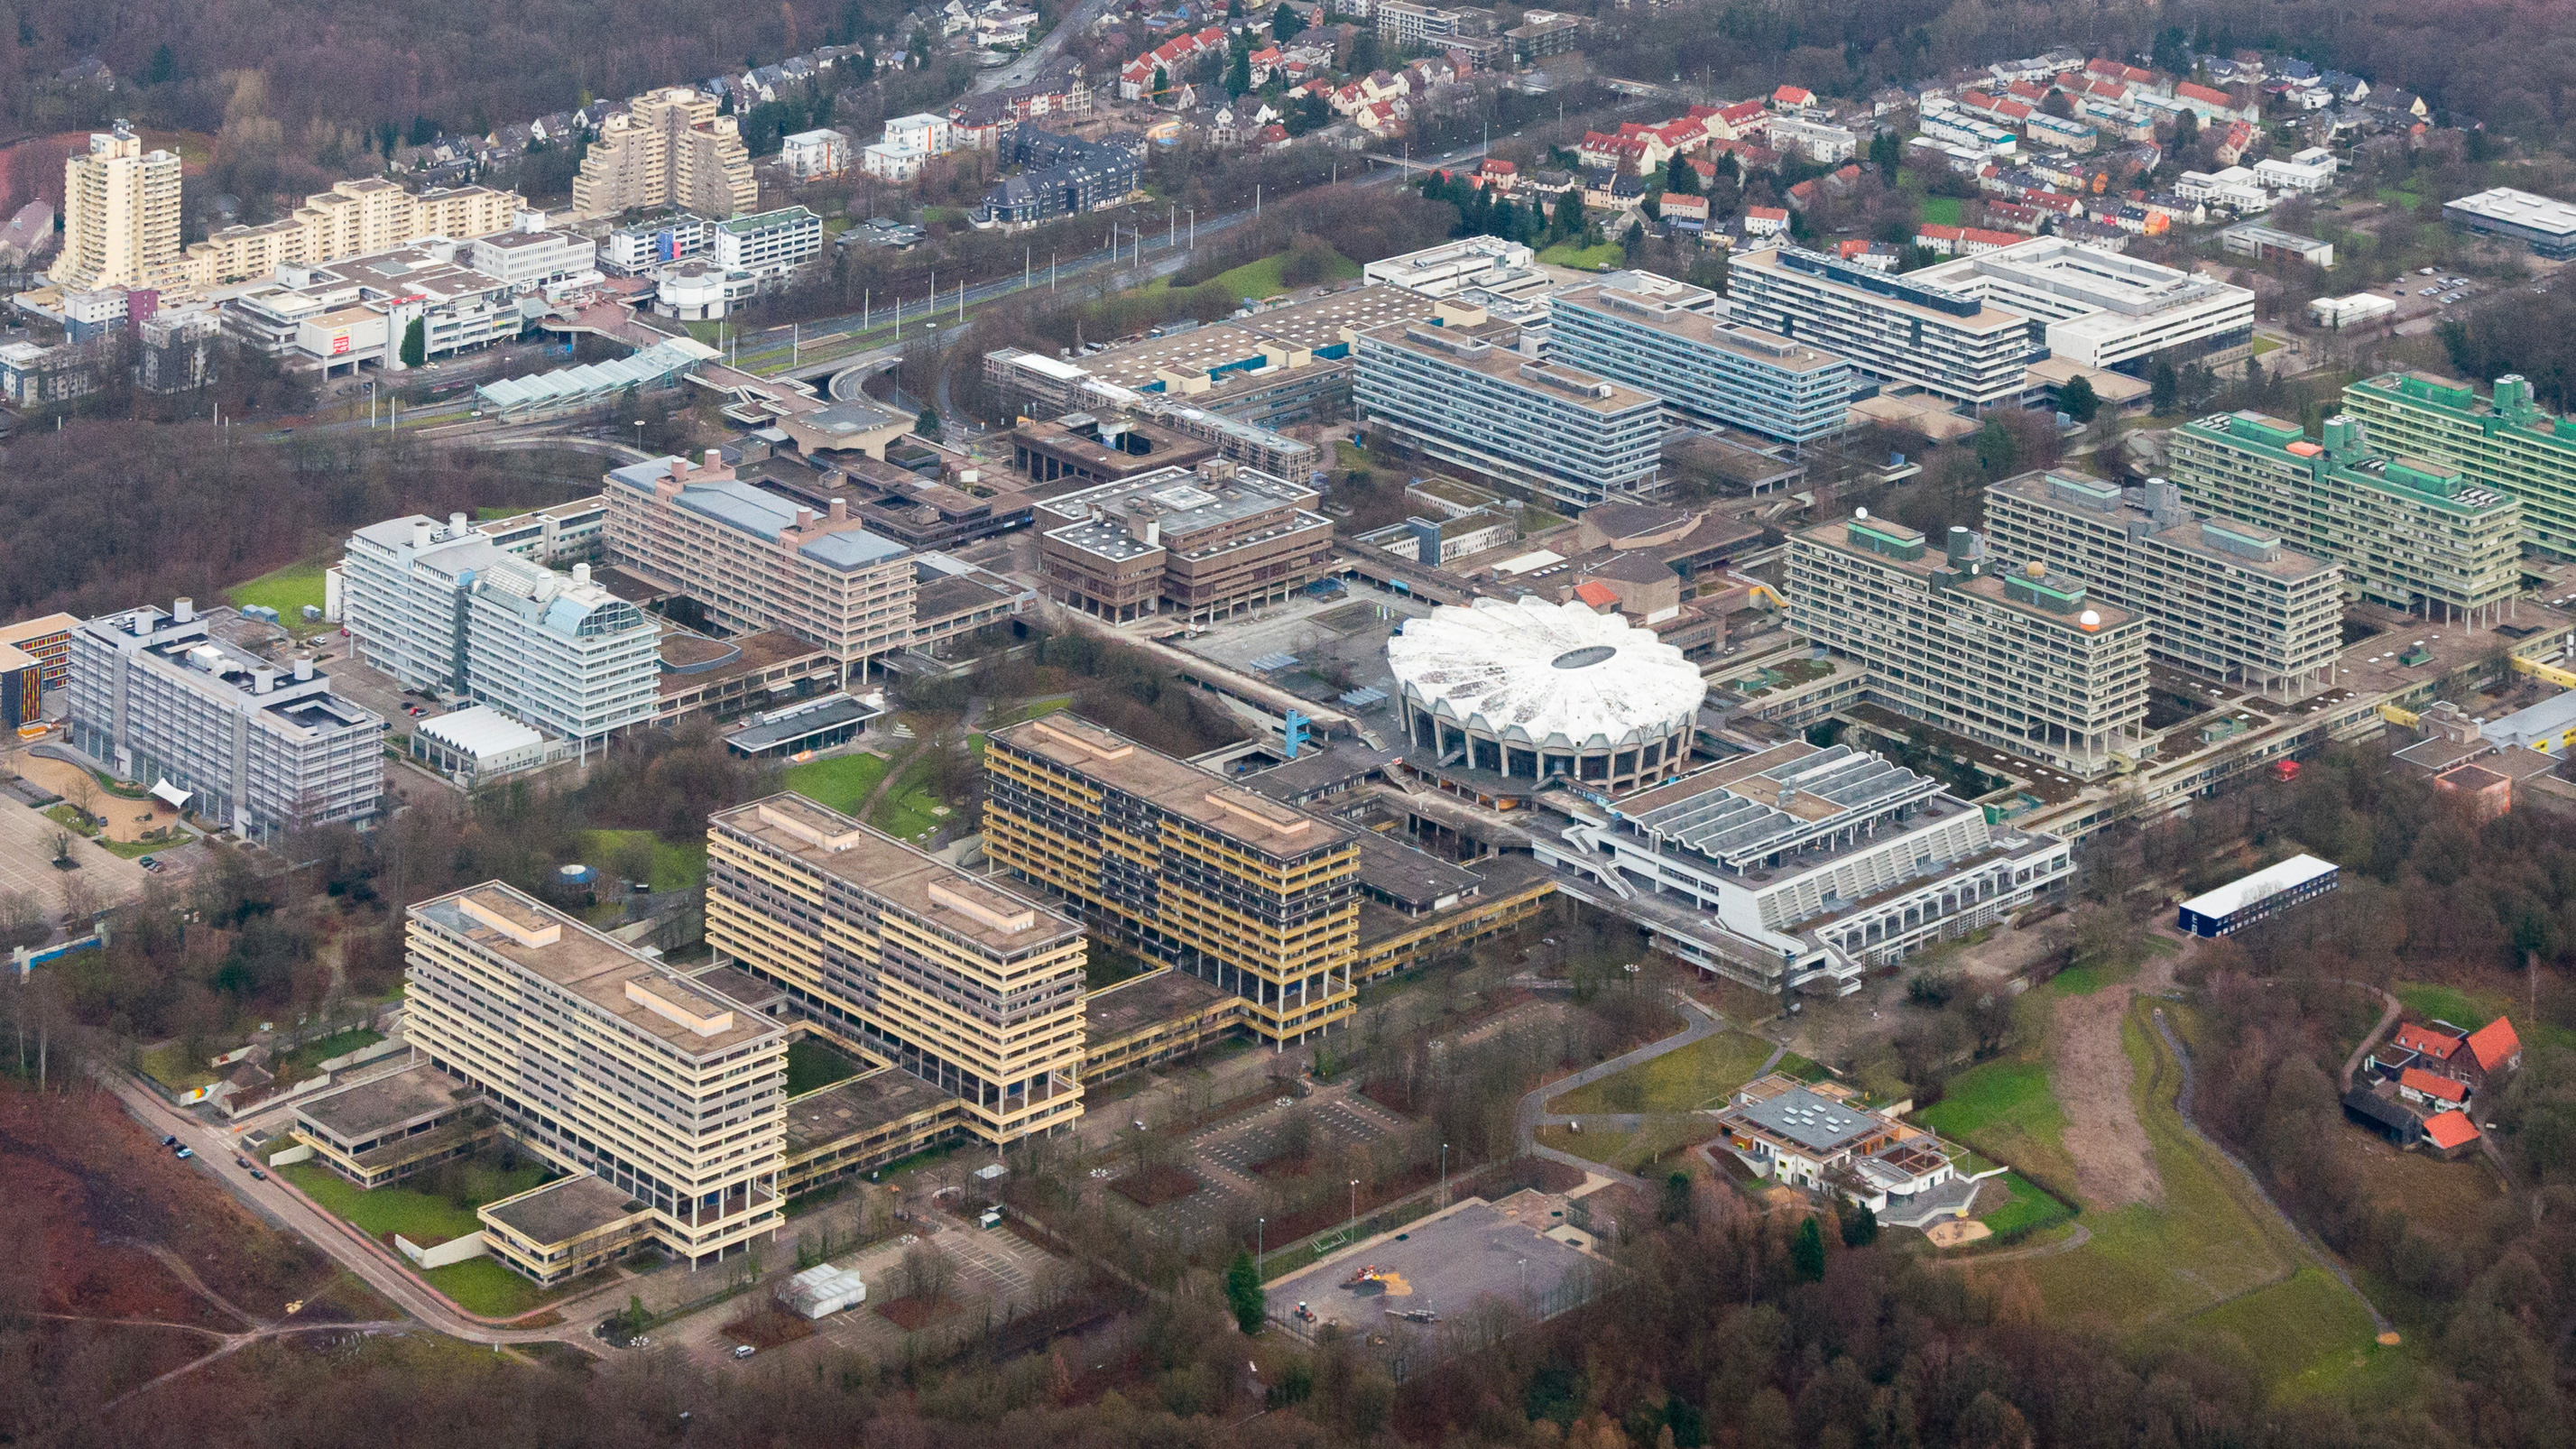 Ruhr University